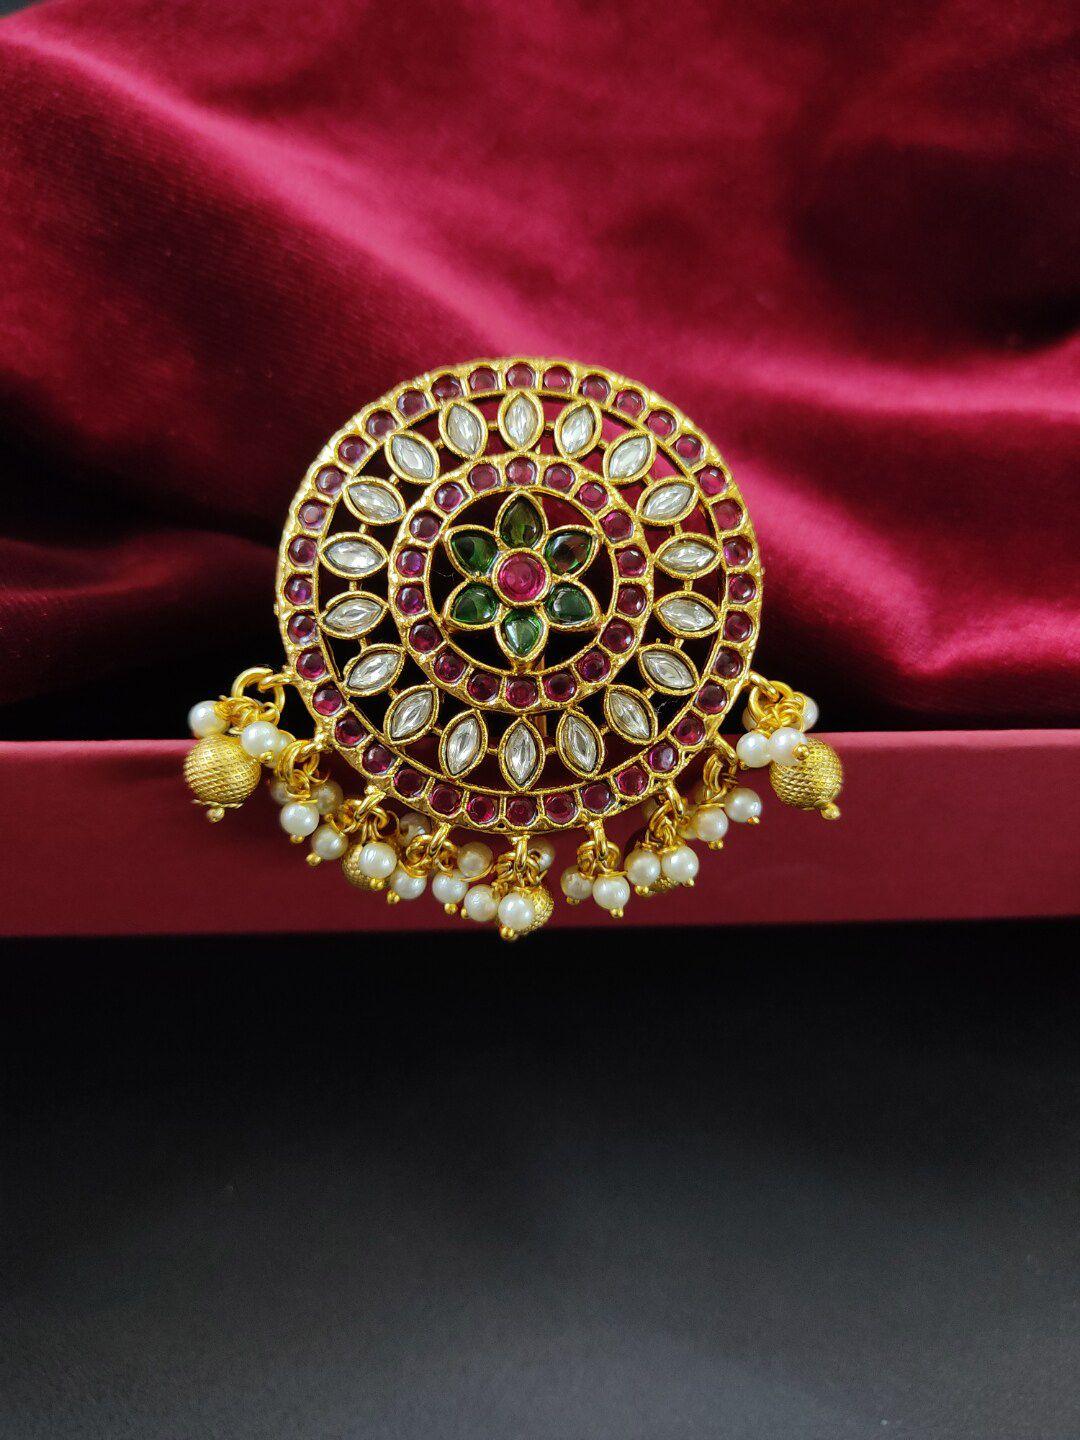 pihtara jewels embellished hair accessory set